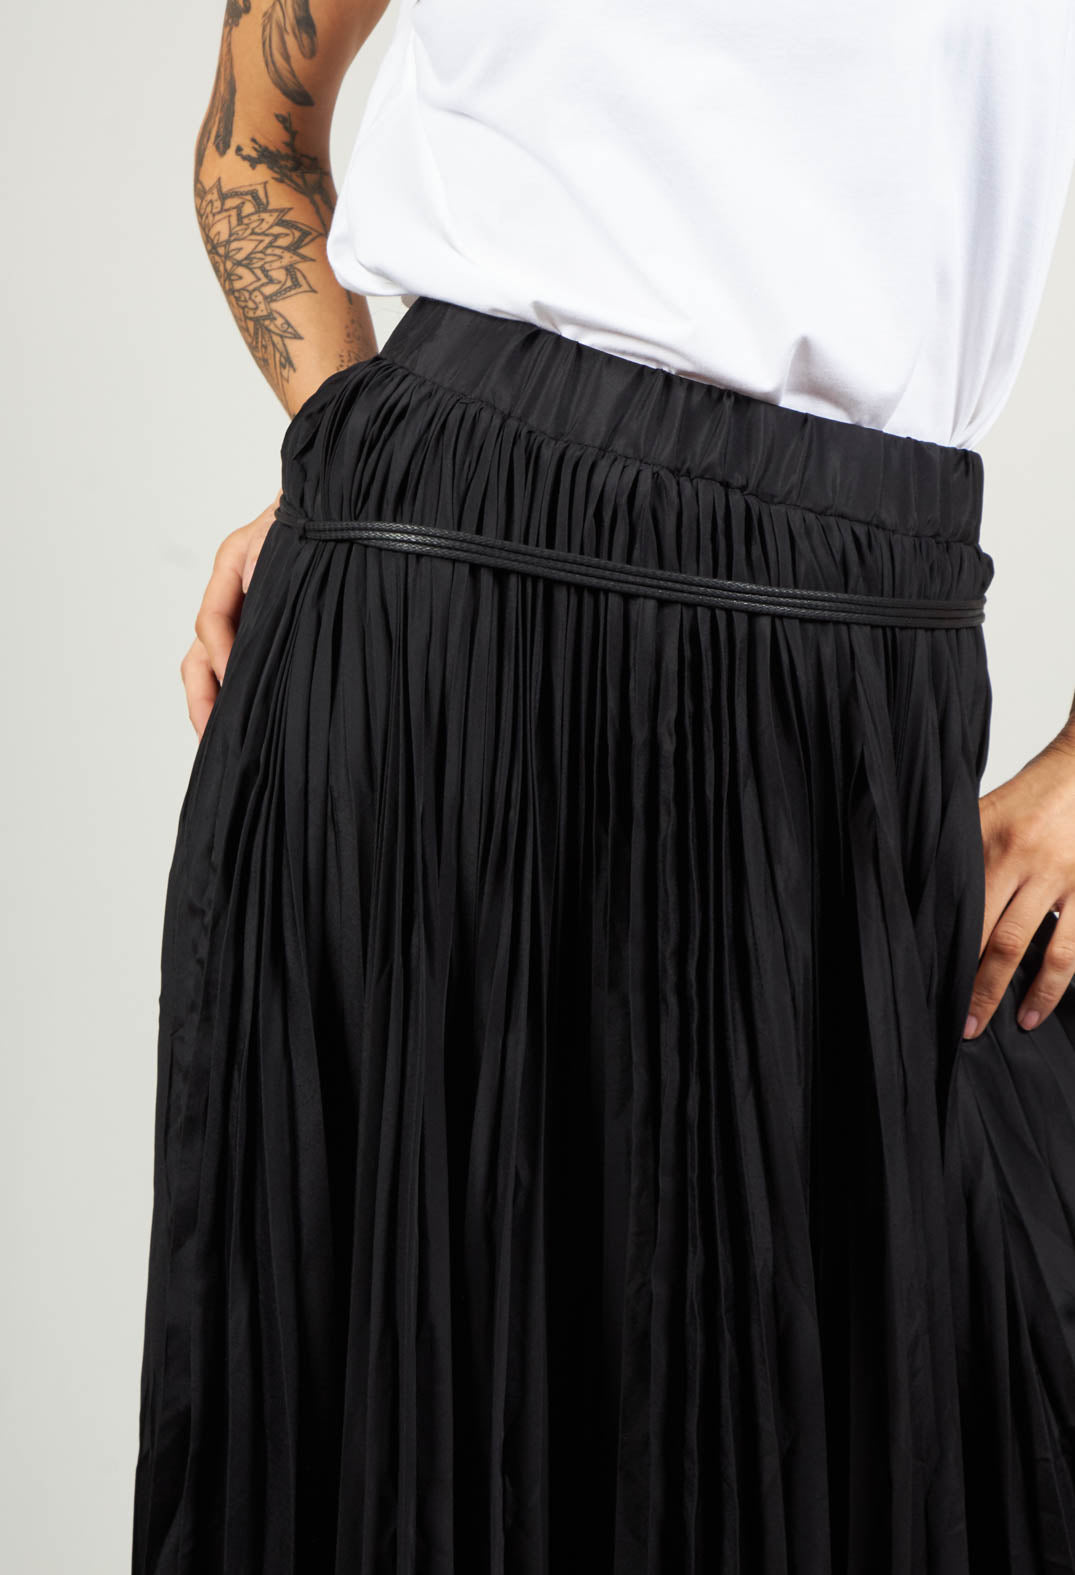 Pleated Skirt with Asymmetric Hem in Black